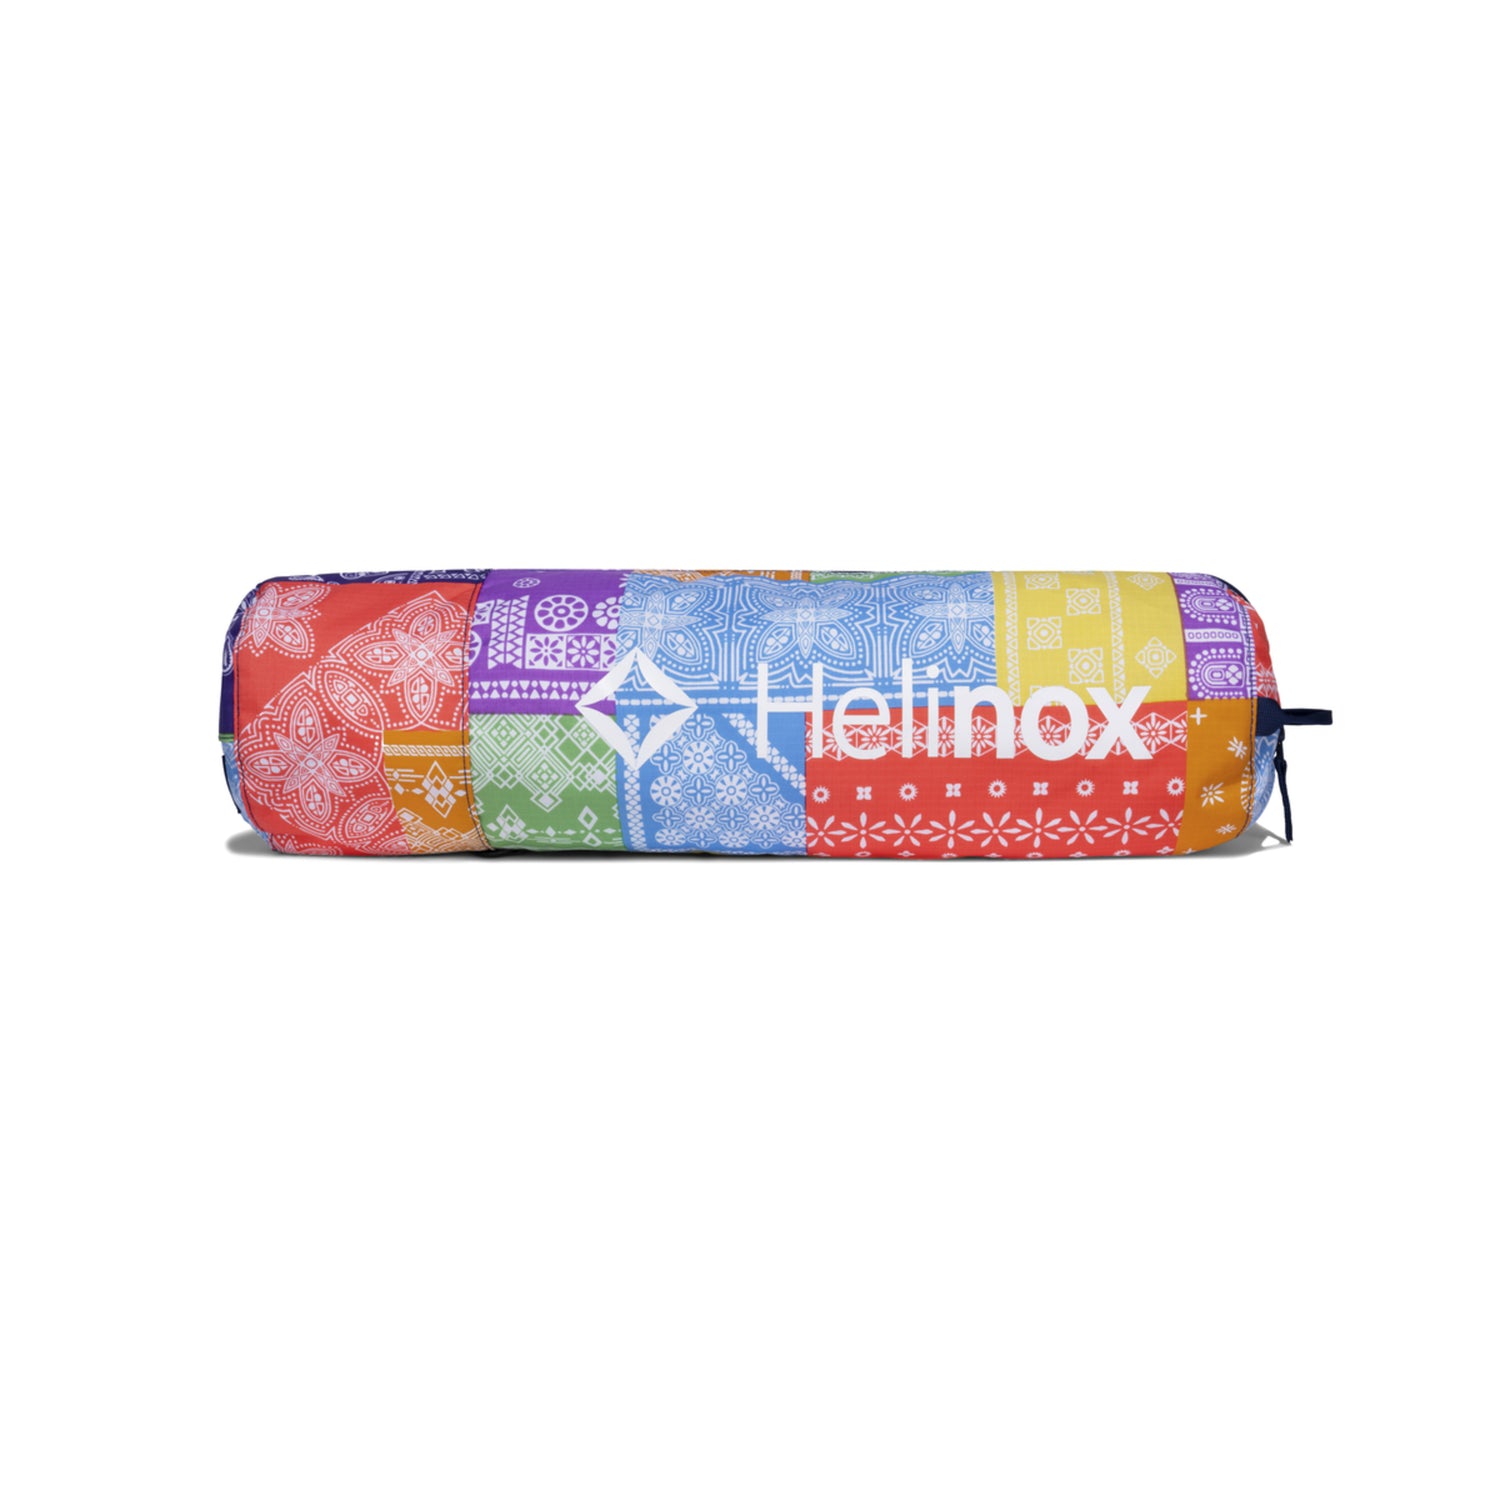 Helinox Cot One Convertible Rainbow Bandana